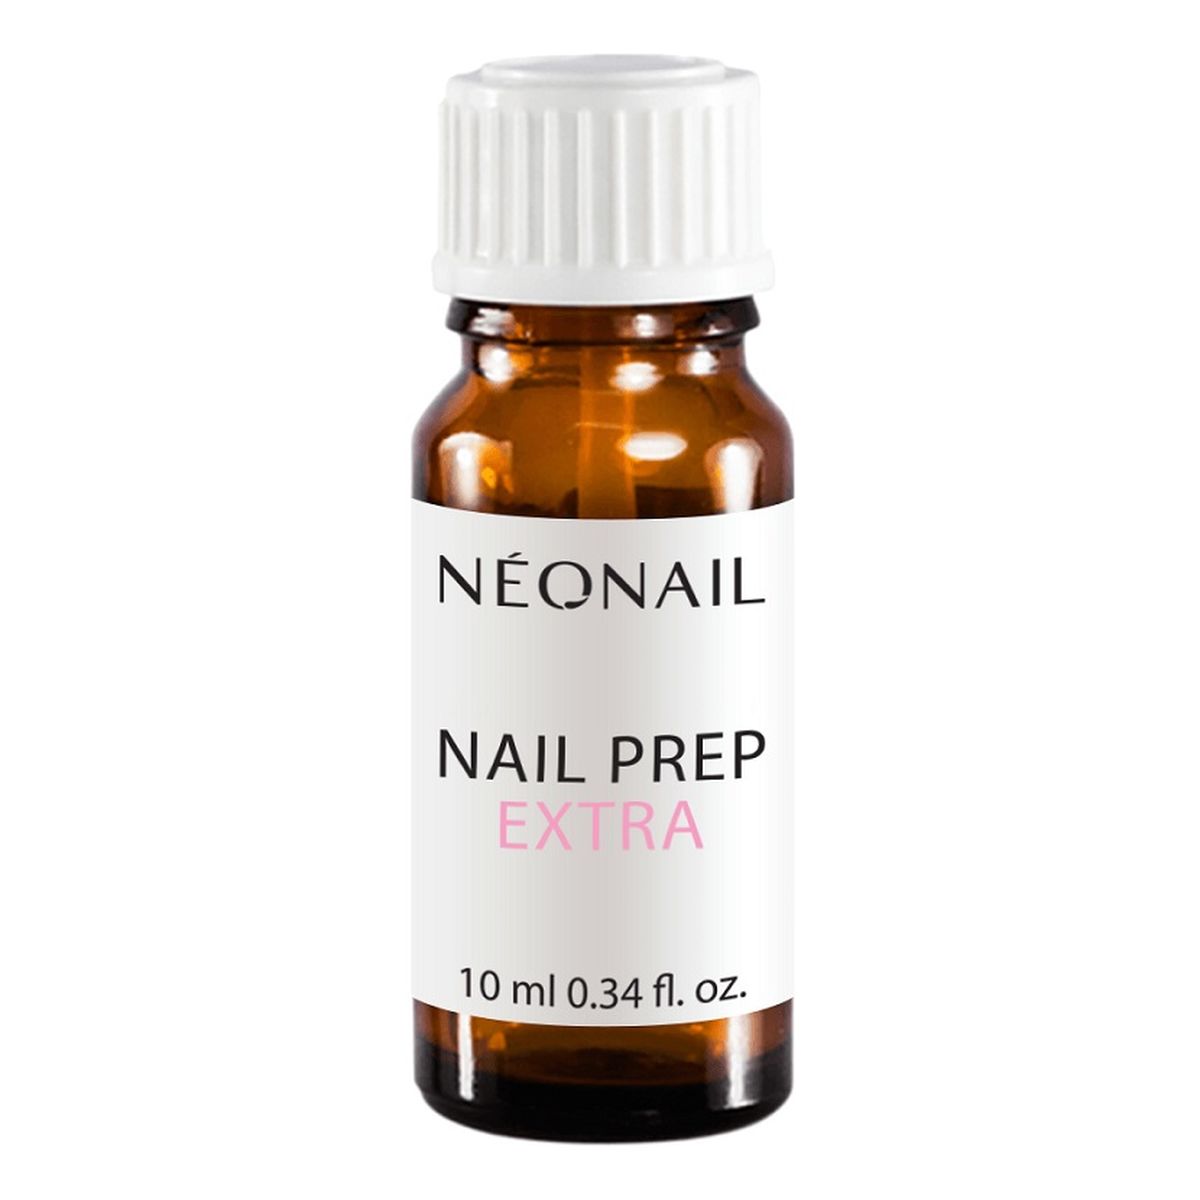 NeoNail Nail prep extra preparat do odtłuszczania paznokci 10ml